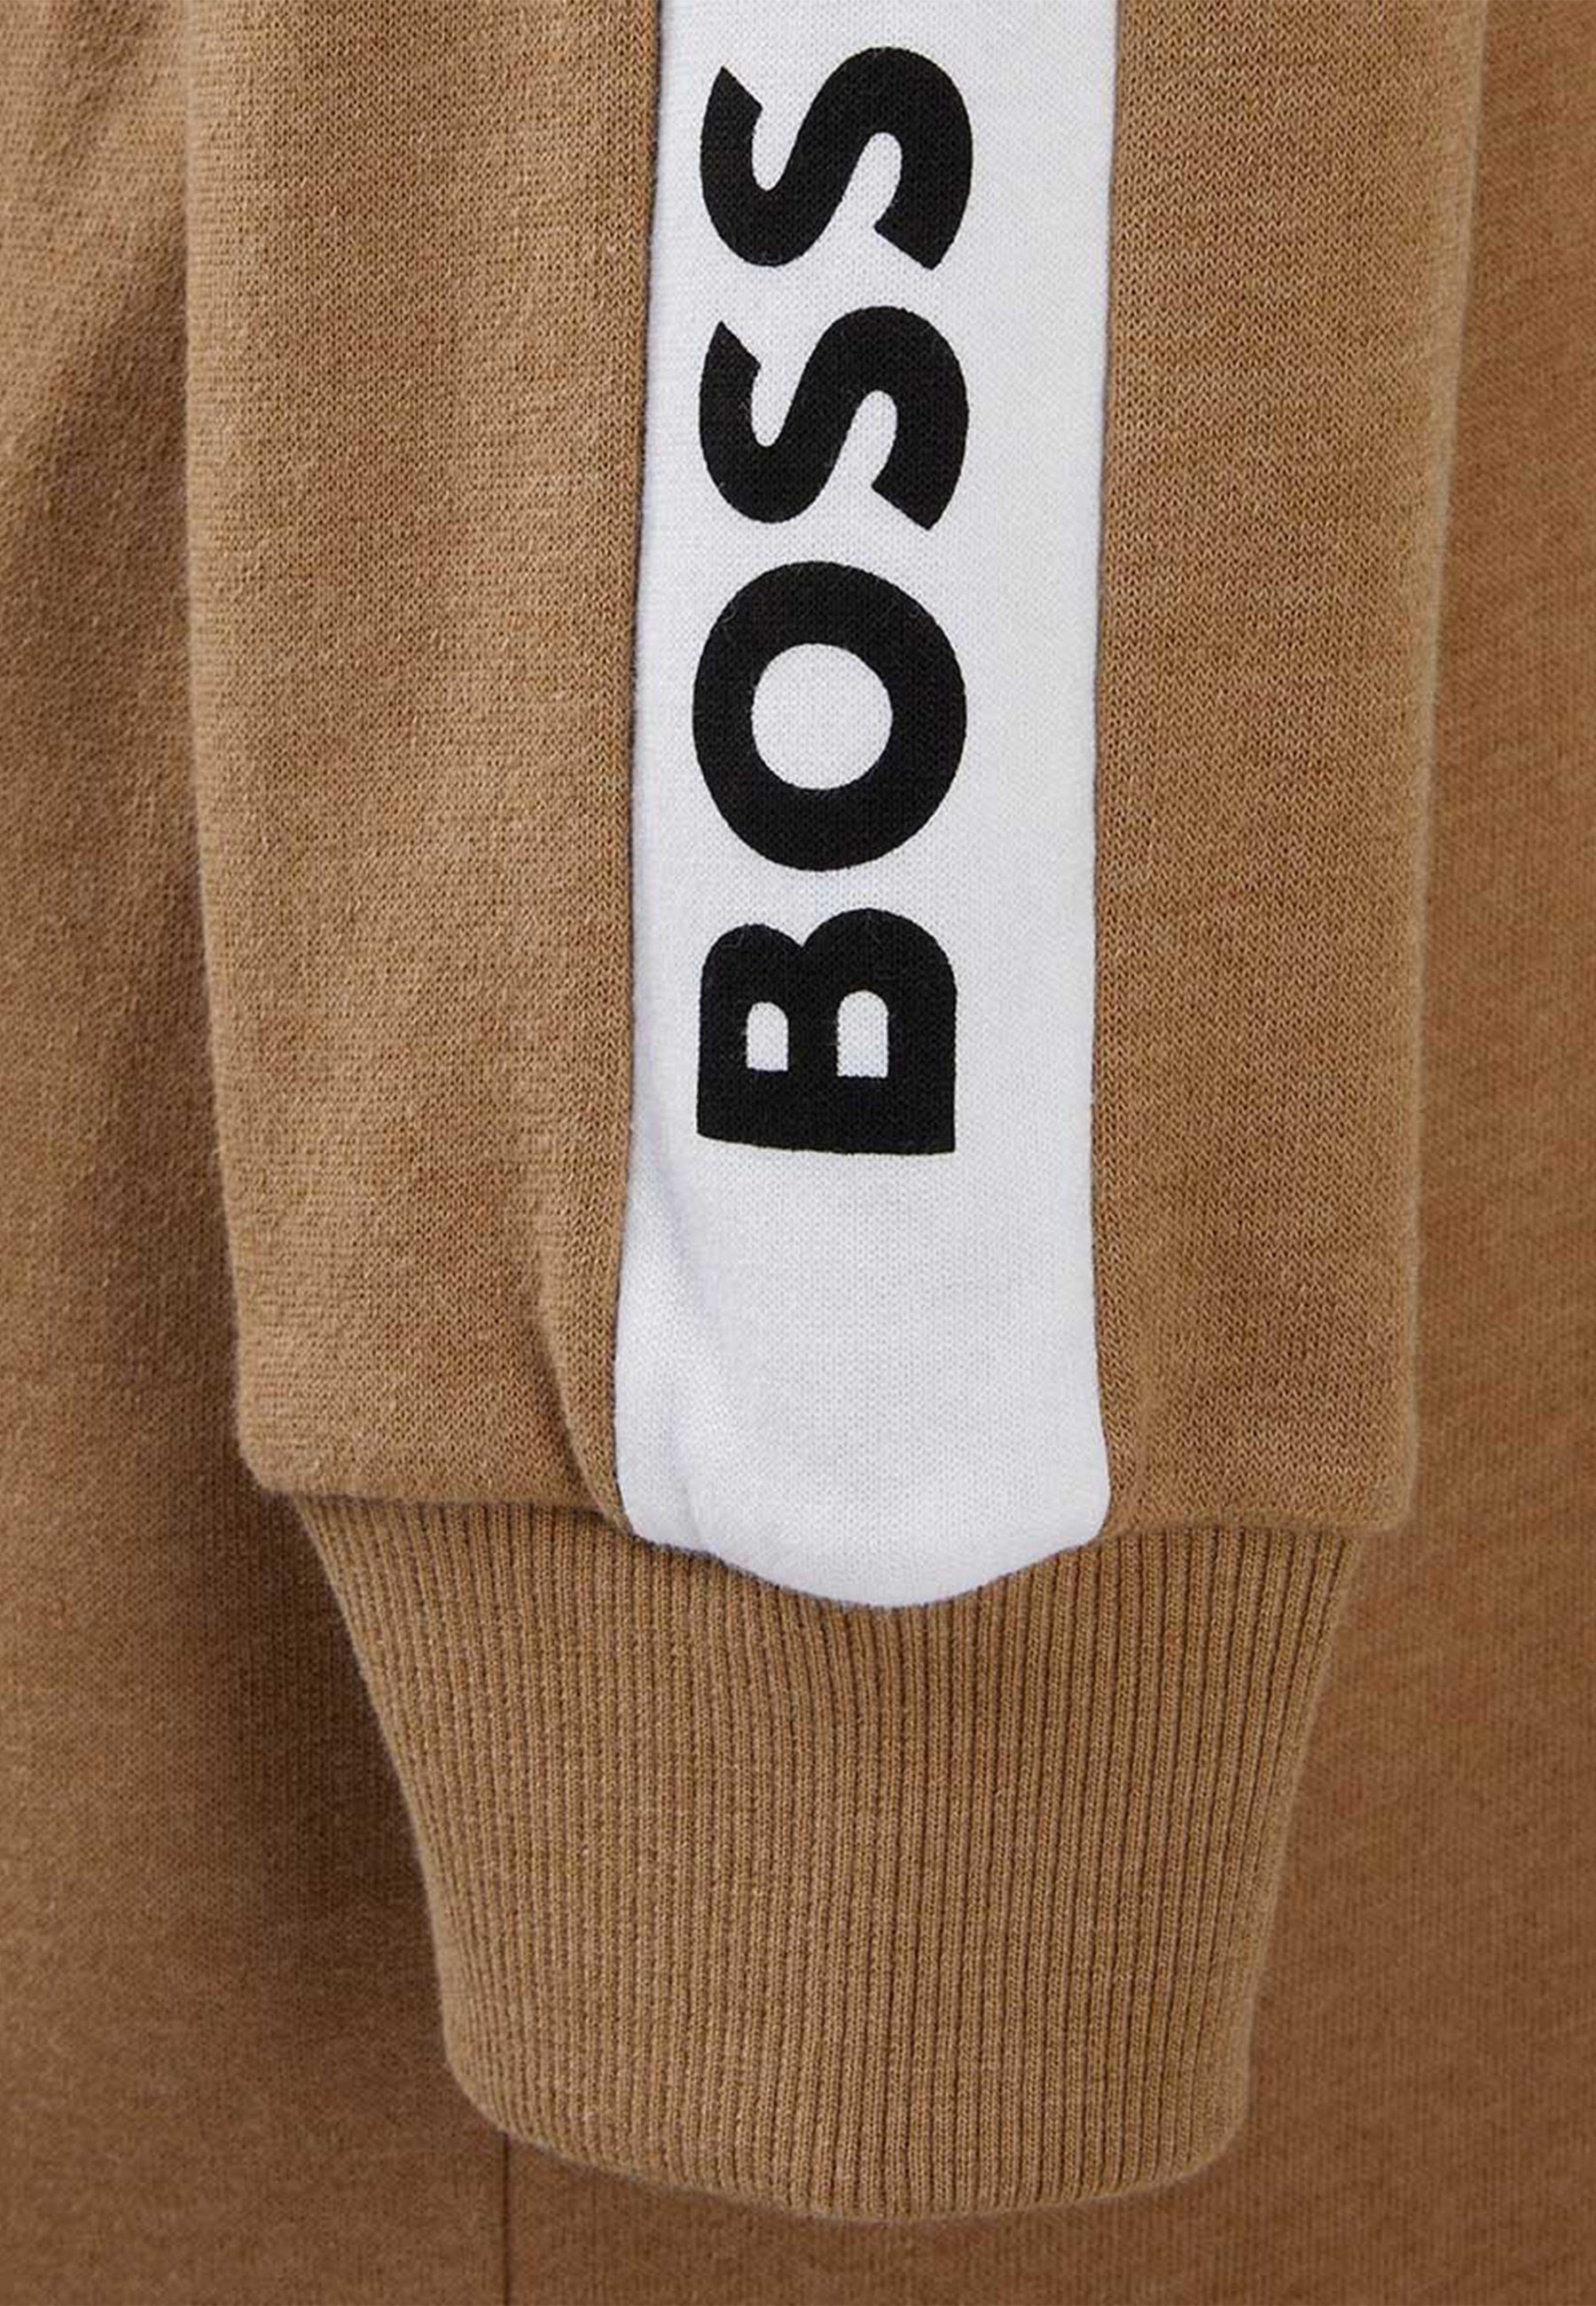 Hugo Boss Home Bademantel BOSS mit Baumwolle, modernem SENSE, 100% CAMEL Design